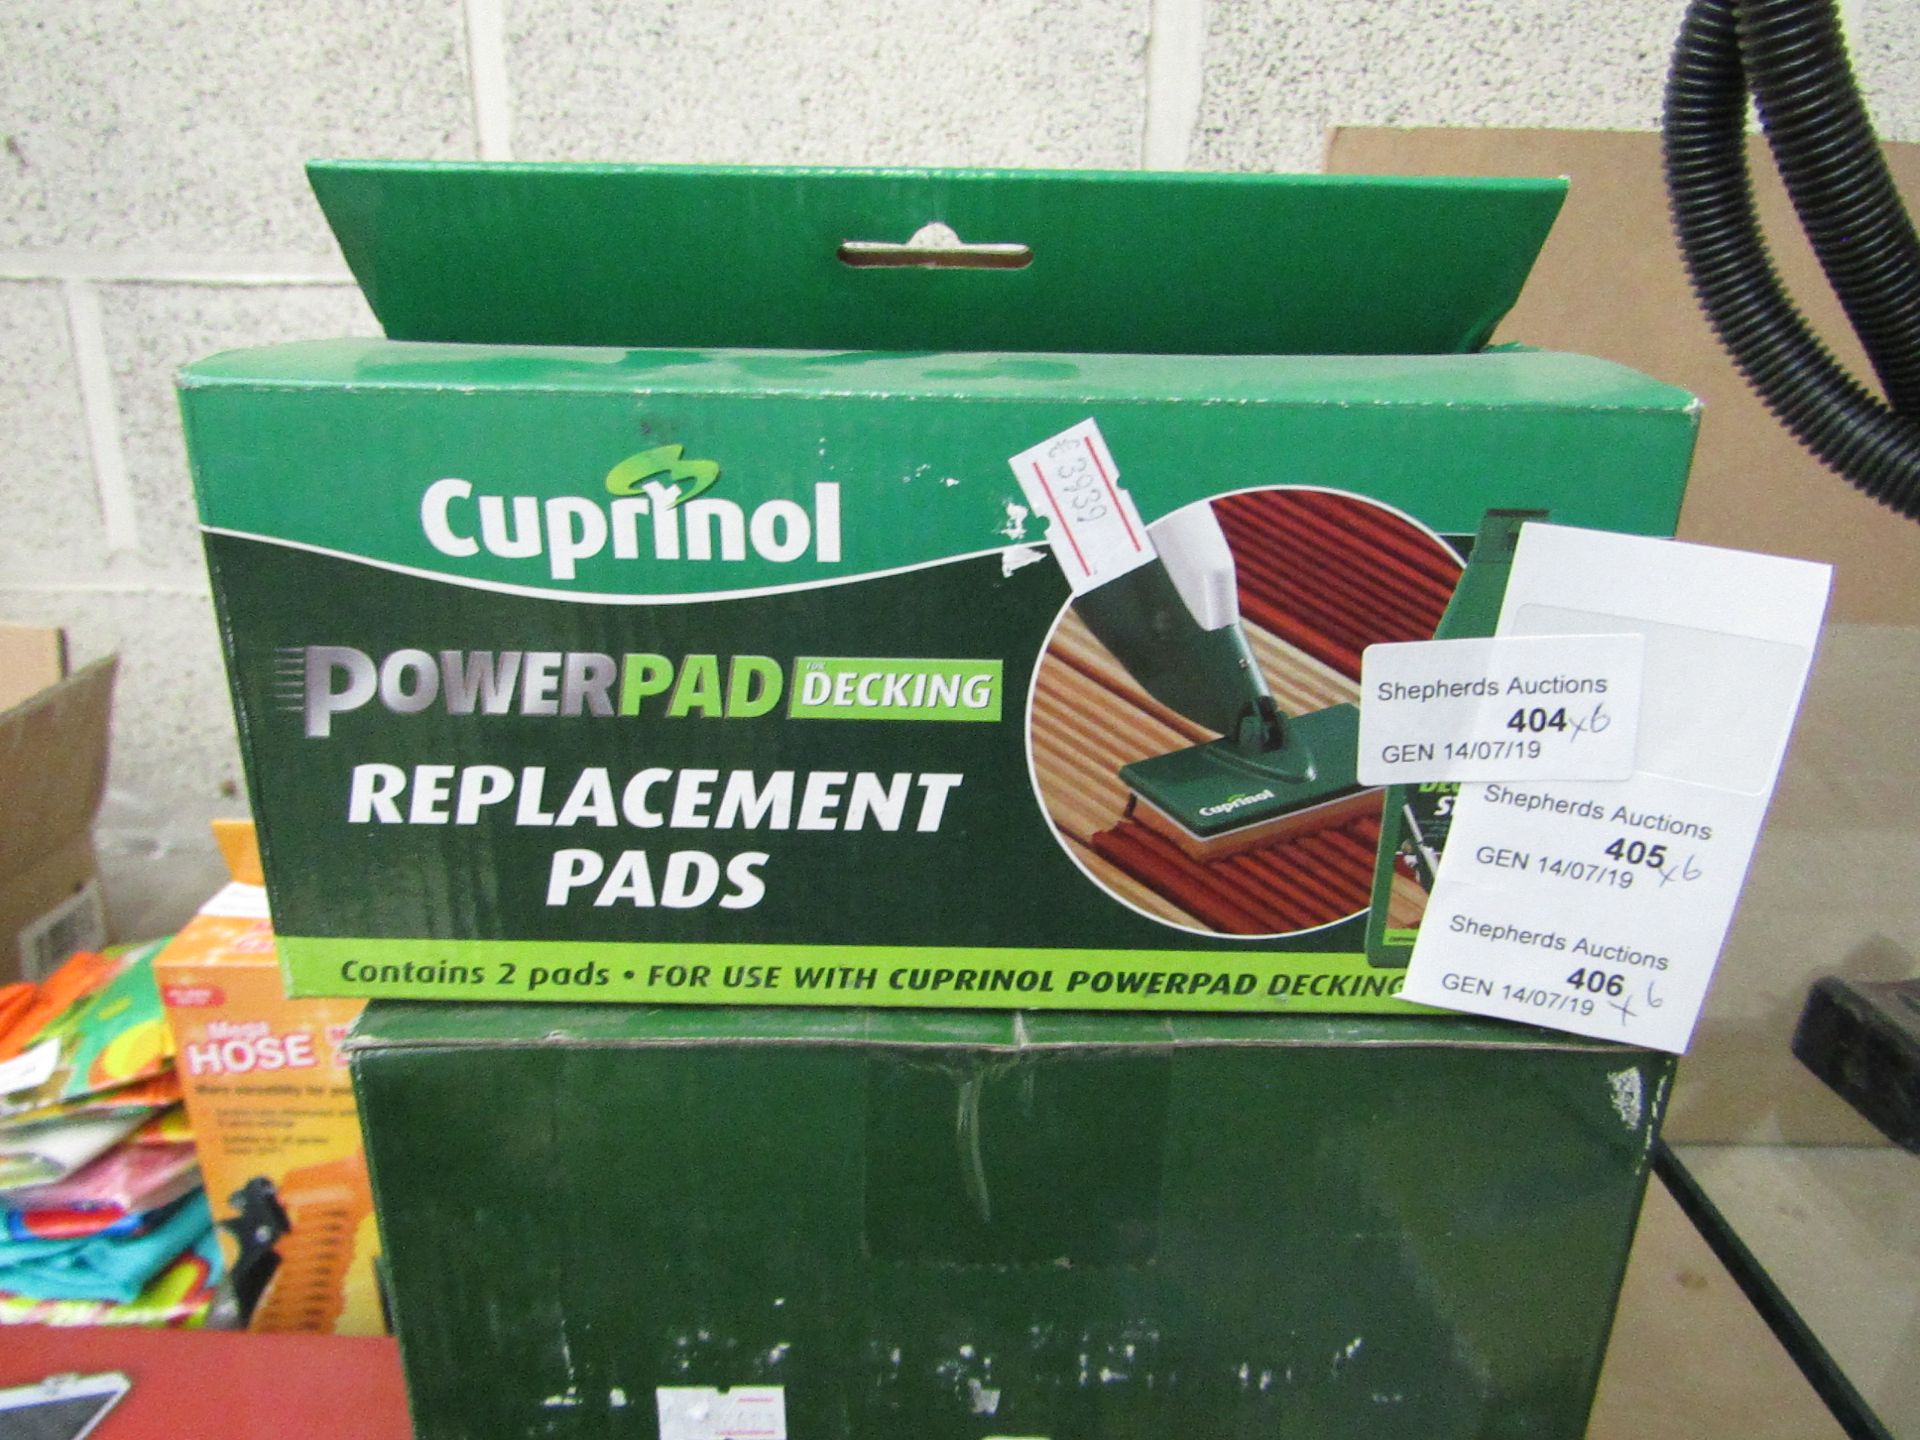 6 x Cuprinol Powerpad Decking replacement pads, boxed